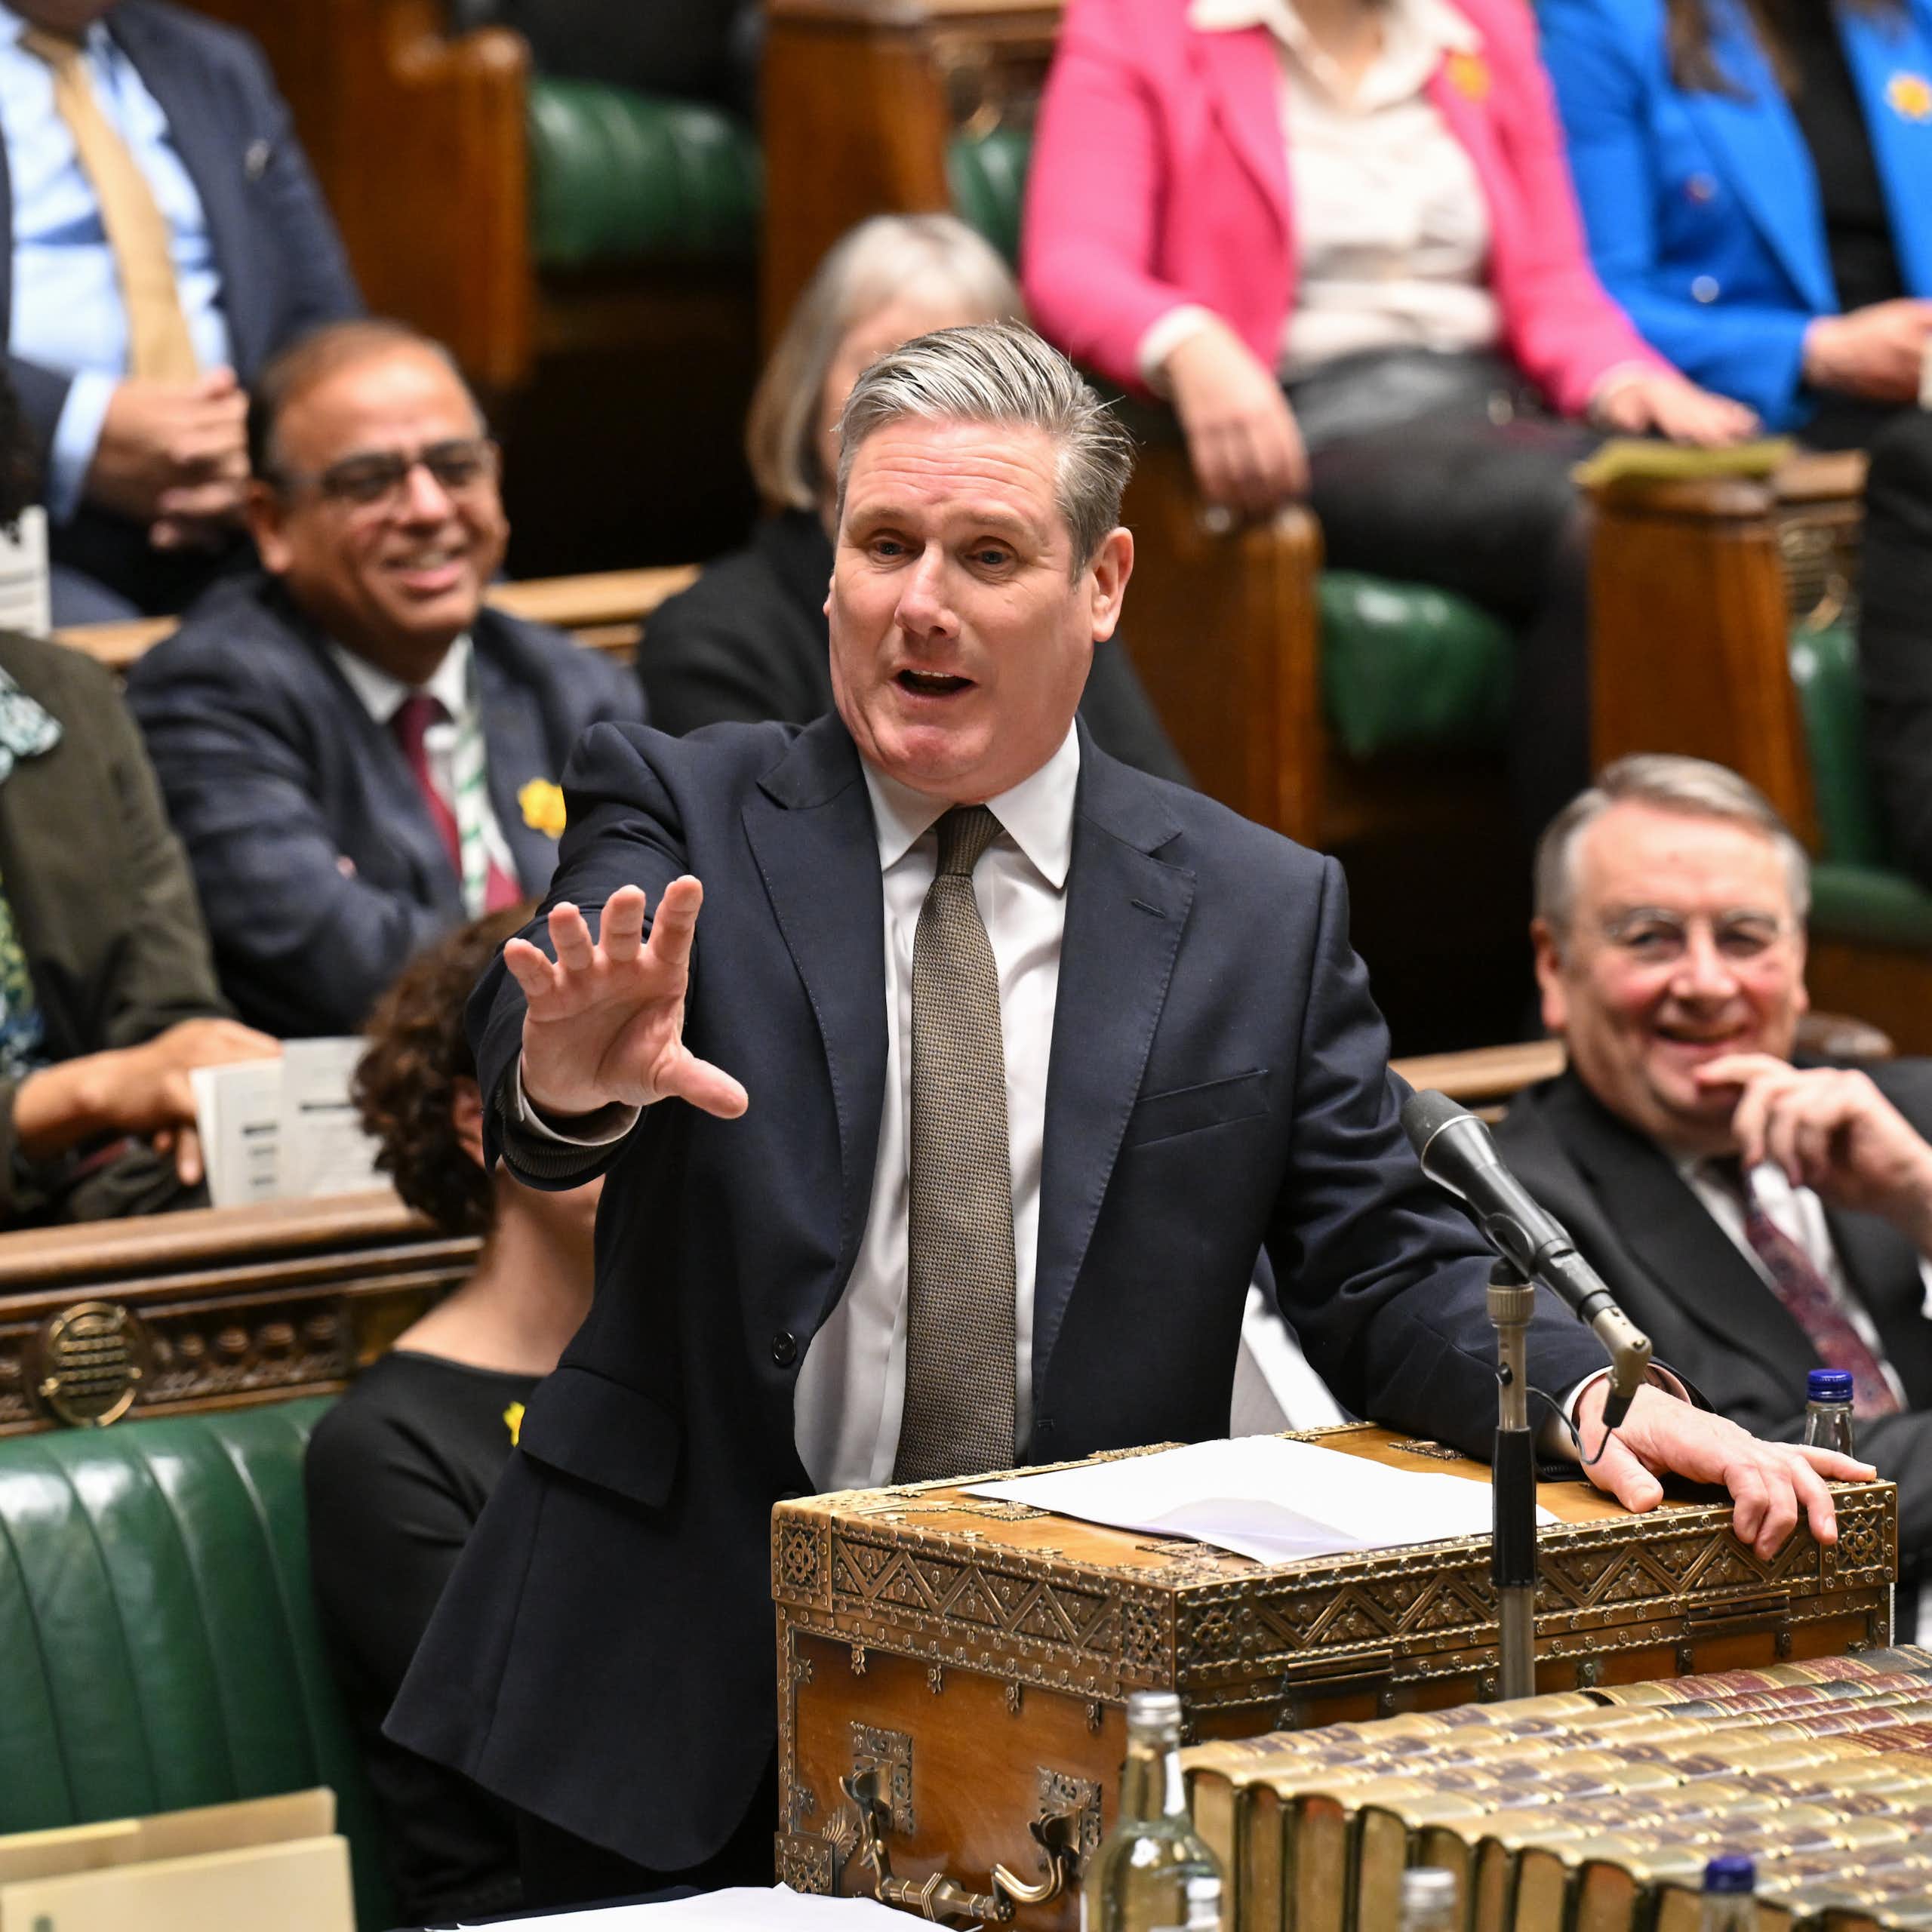 https://www.flickr.com/photos/uk_parliament/53602139215/